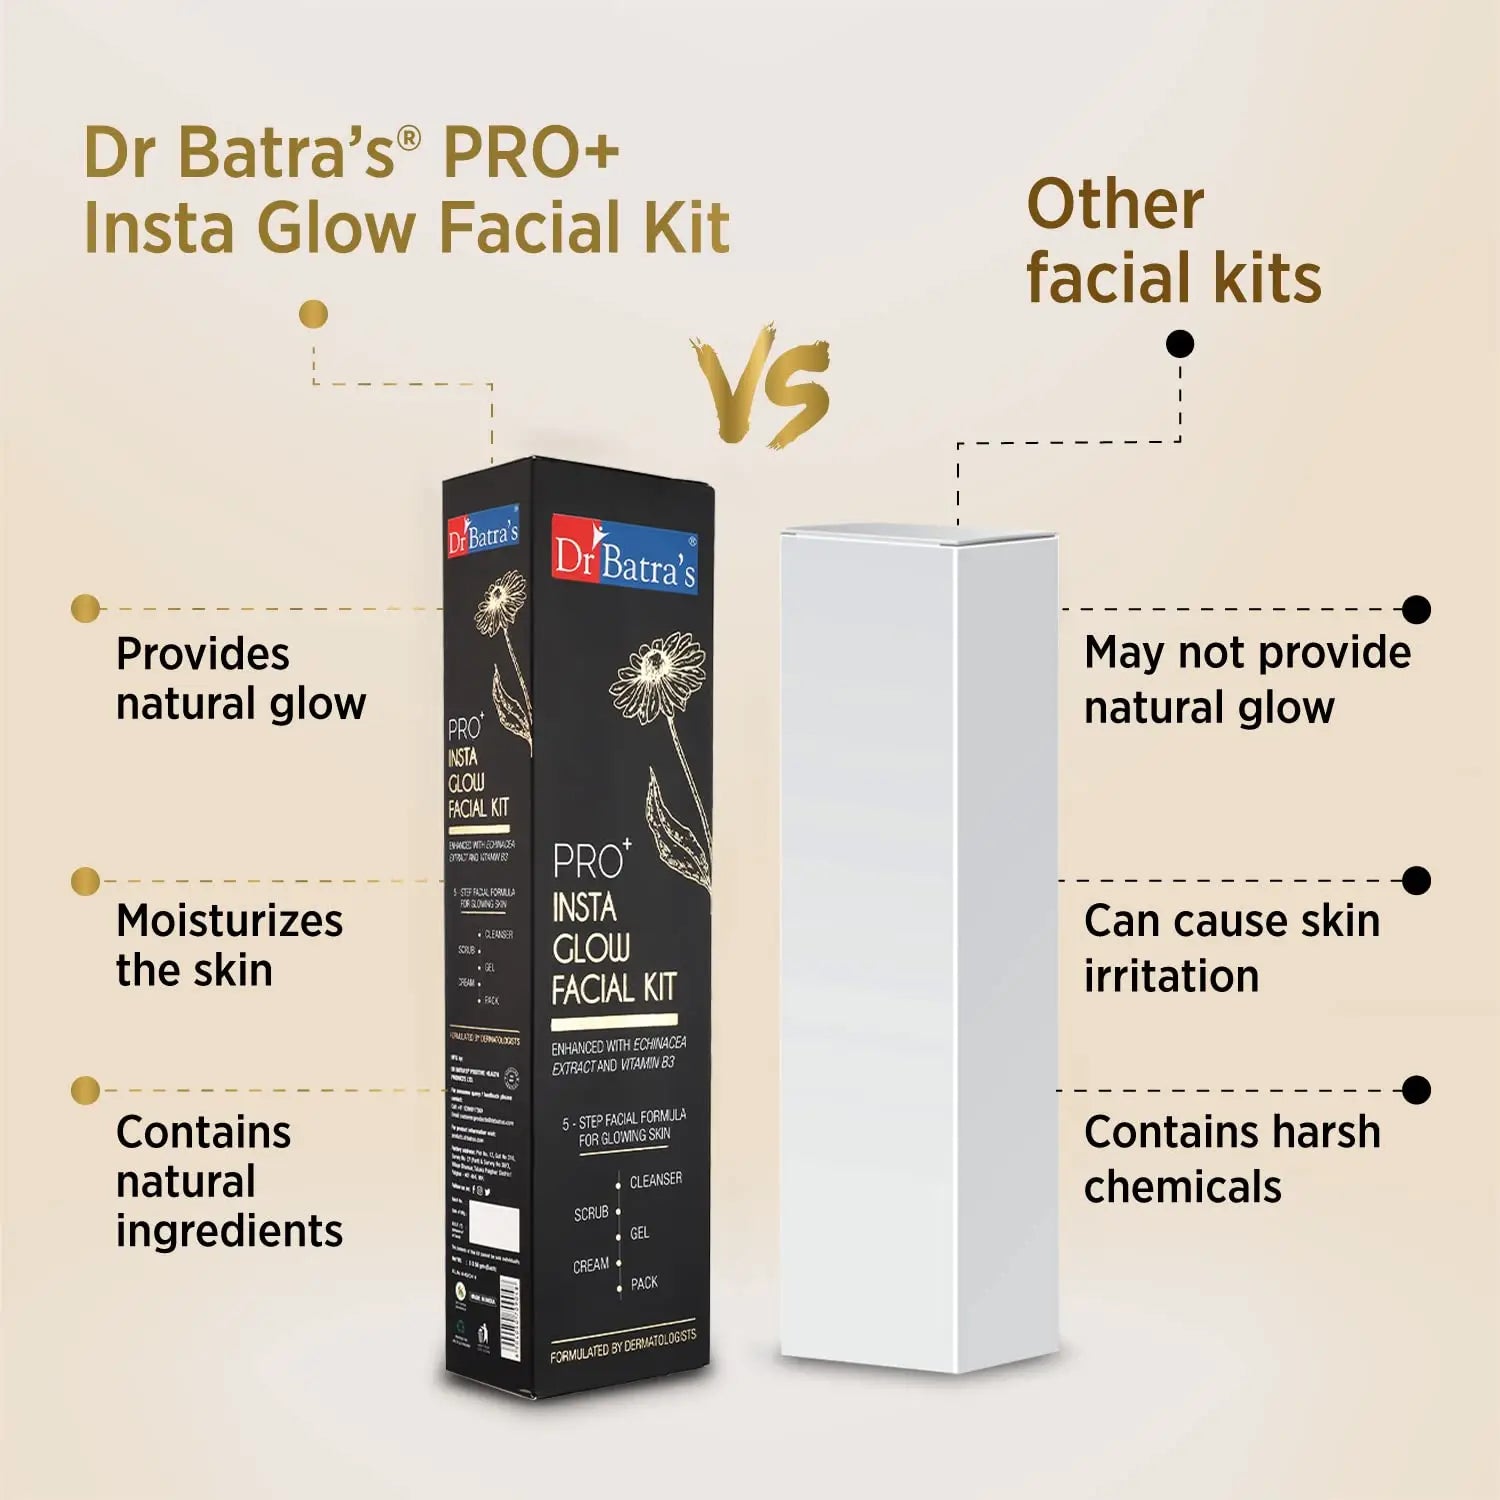 Dr Batra’s PRO+ Insta Glow Facial Kit